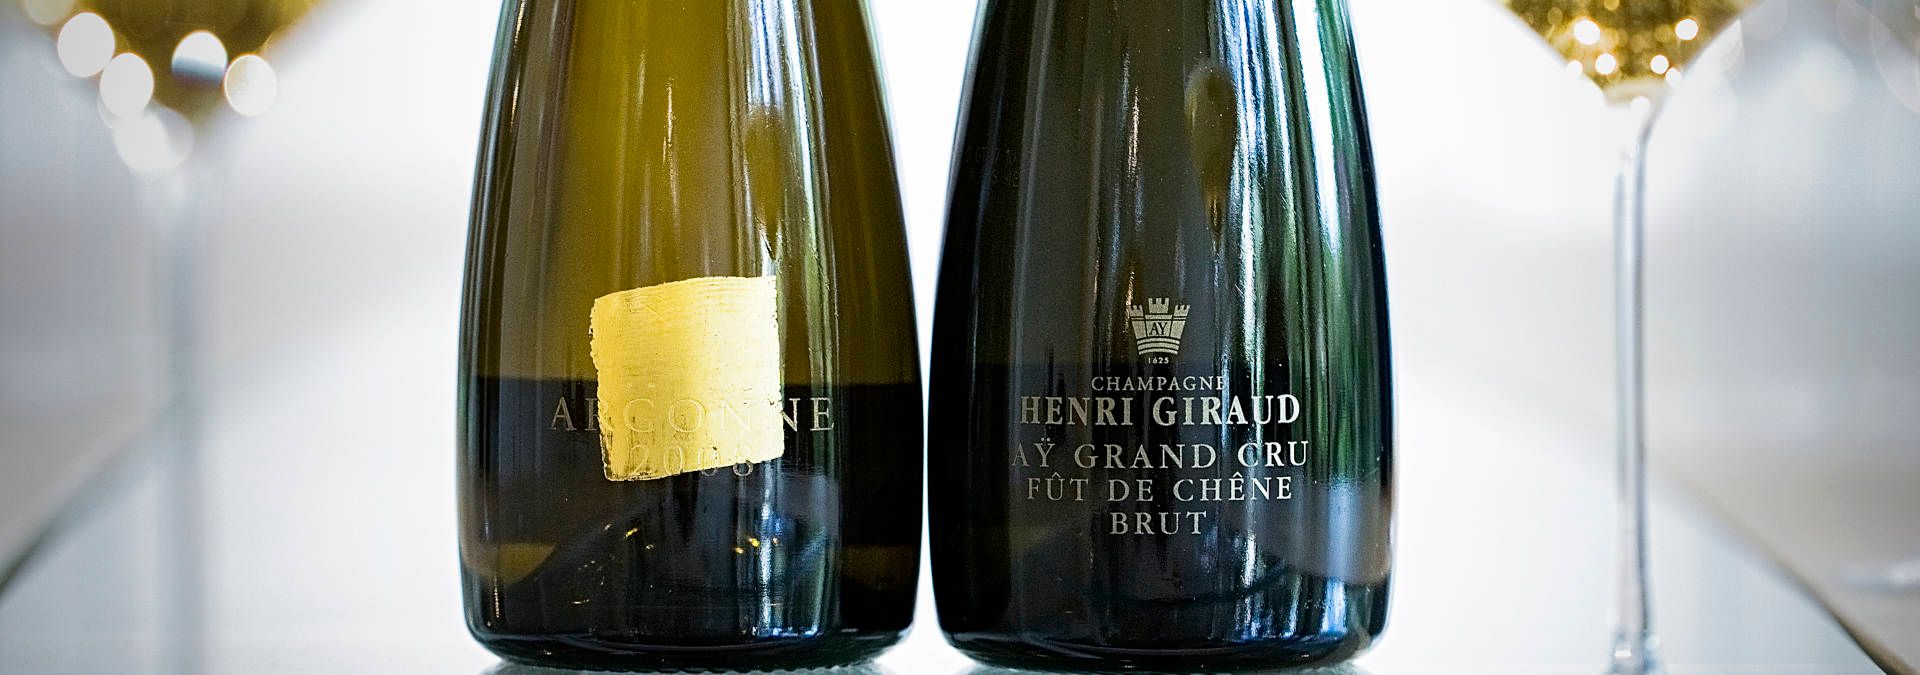 Champagne Henri Giraud - Rue des Vignerons